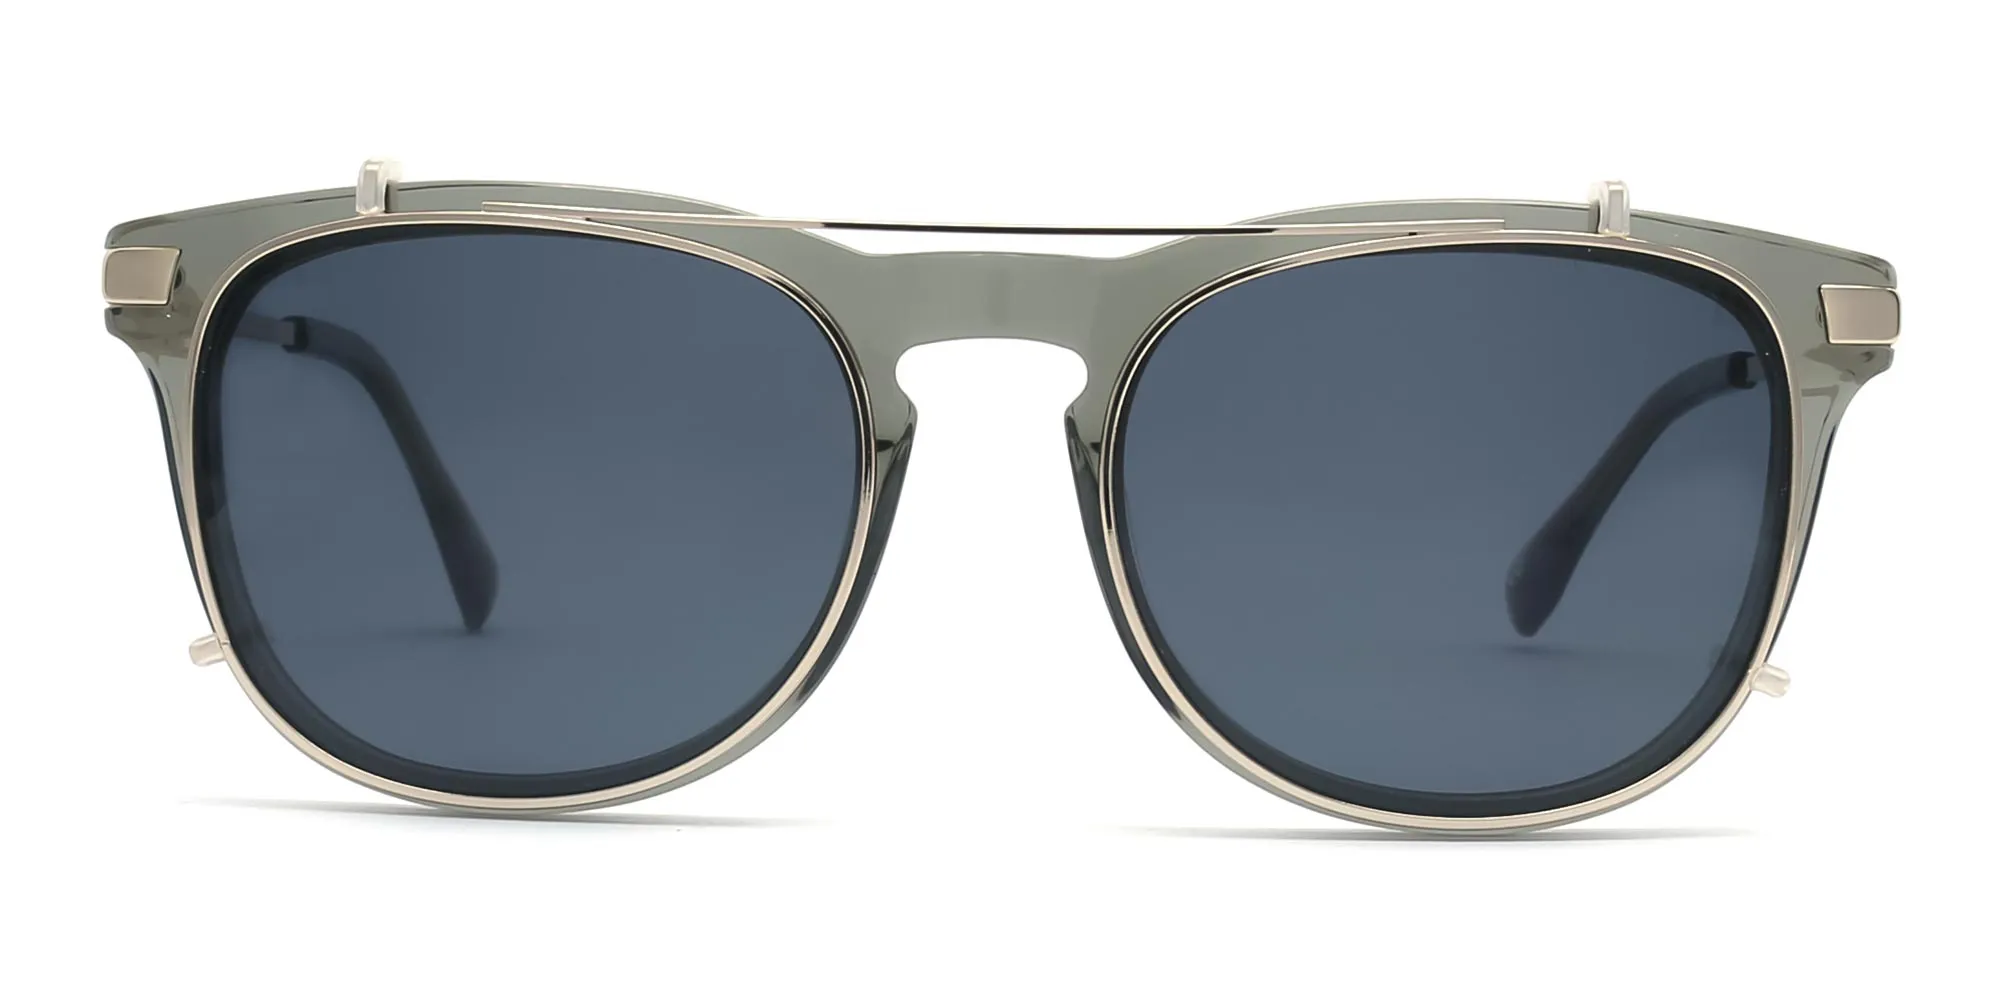 SHEERAN 2 - Aviator Clip on Sunglasses - Free Shipping | Specscart.®